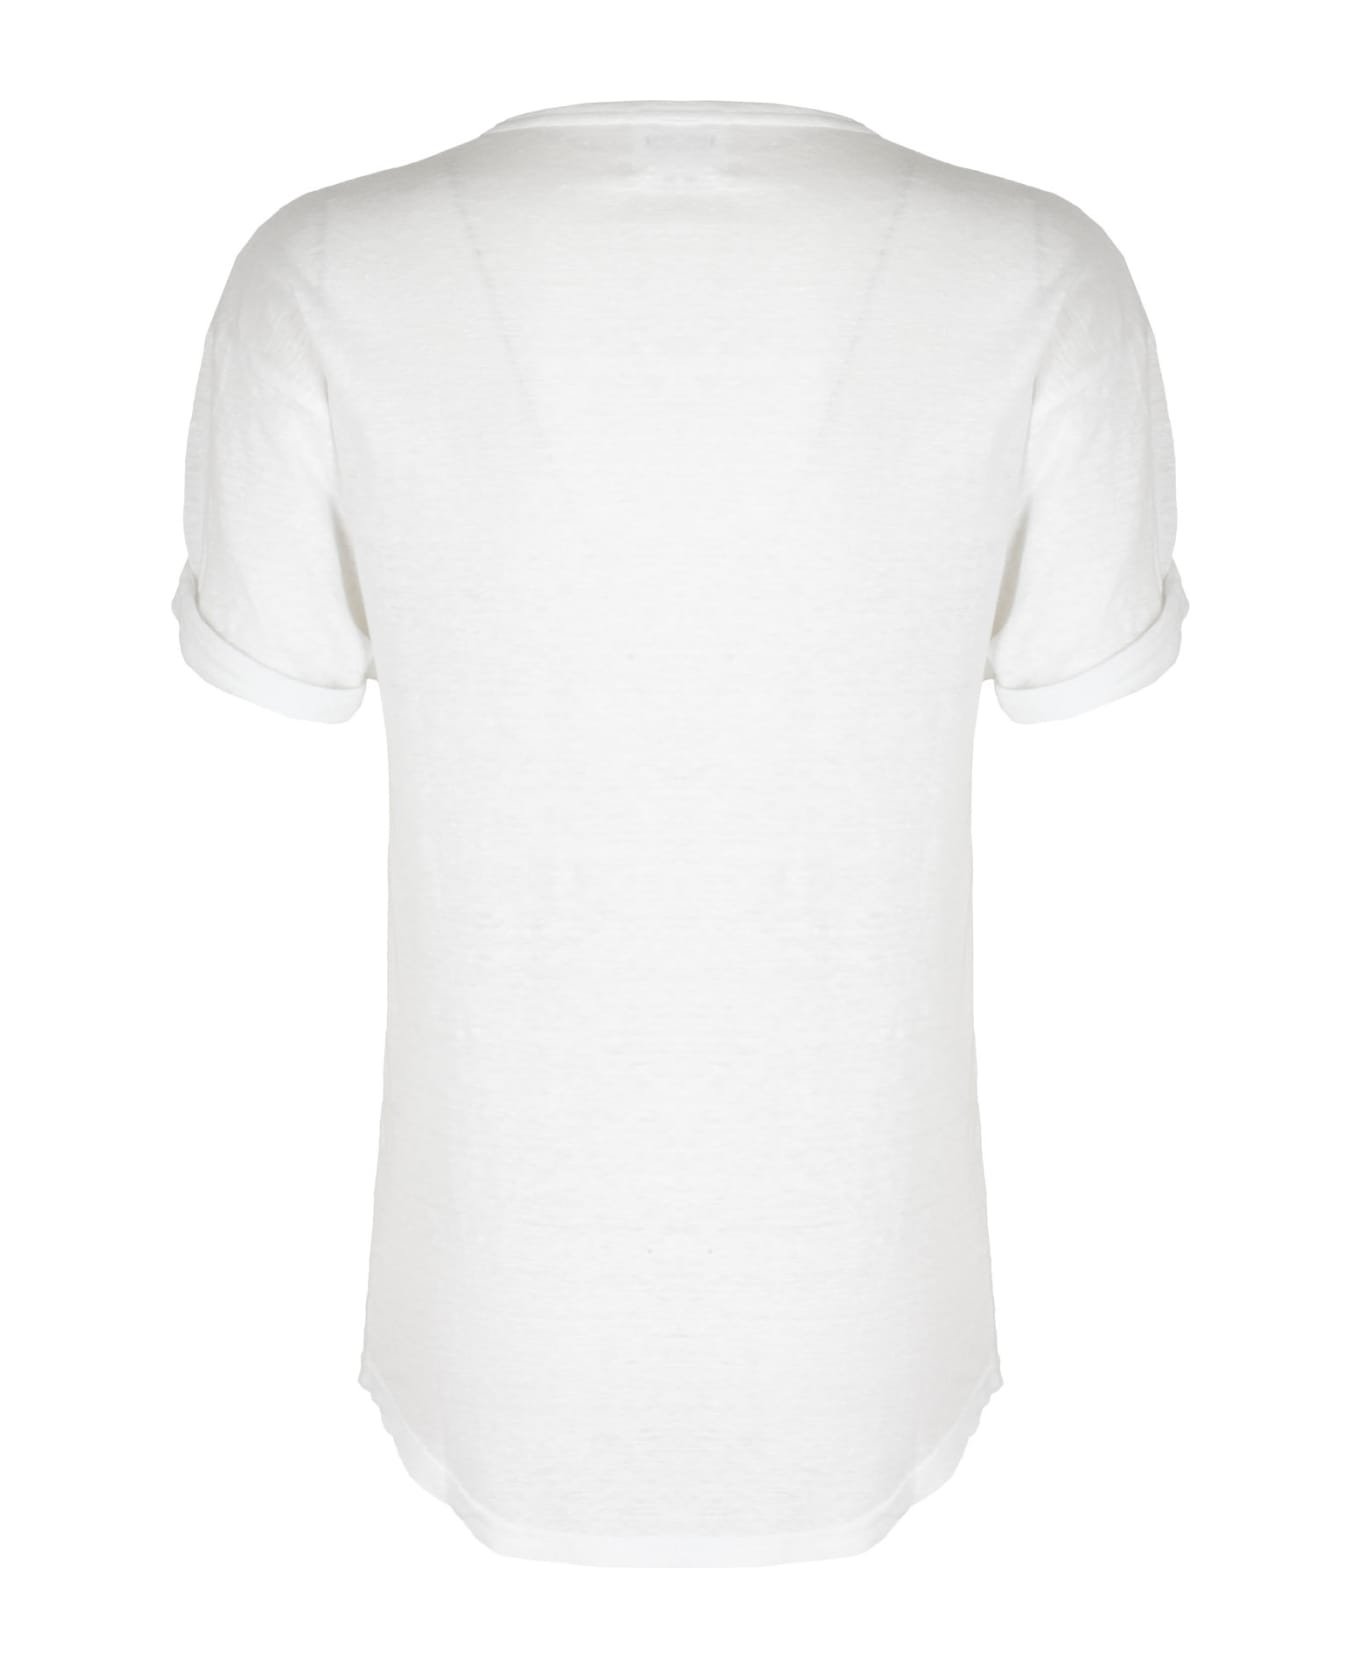 Marant Étoile Koldi - Wh White Tシャツ